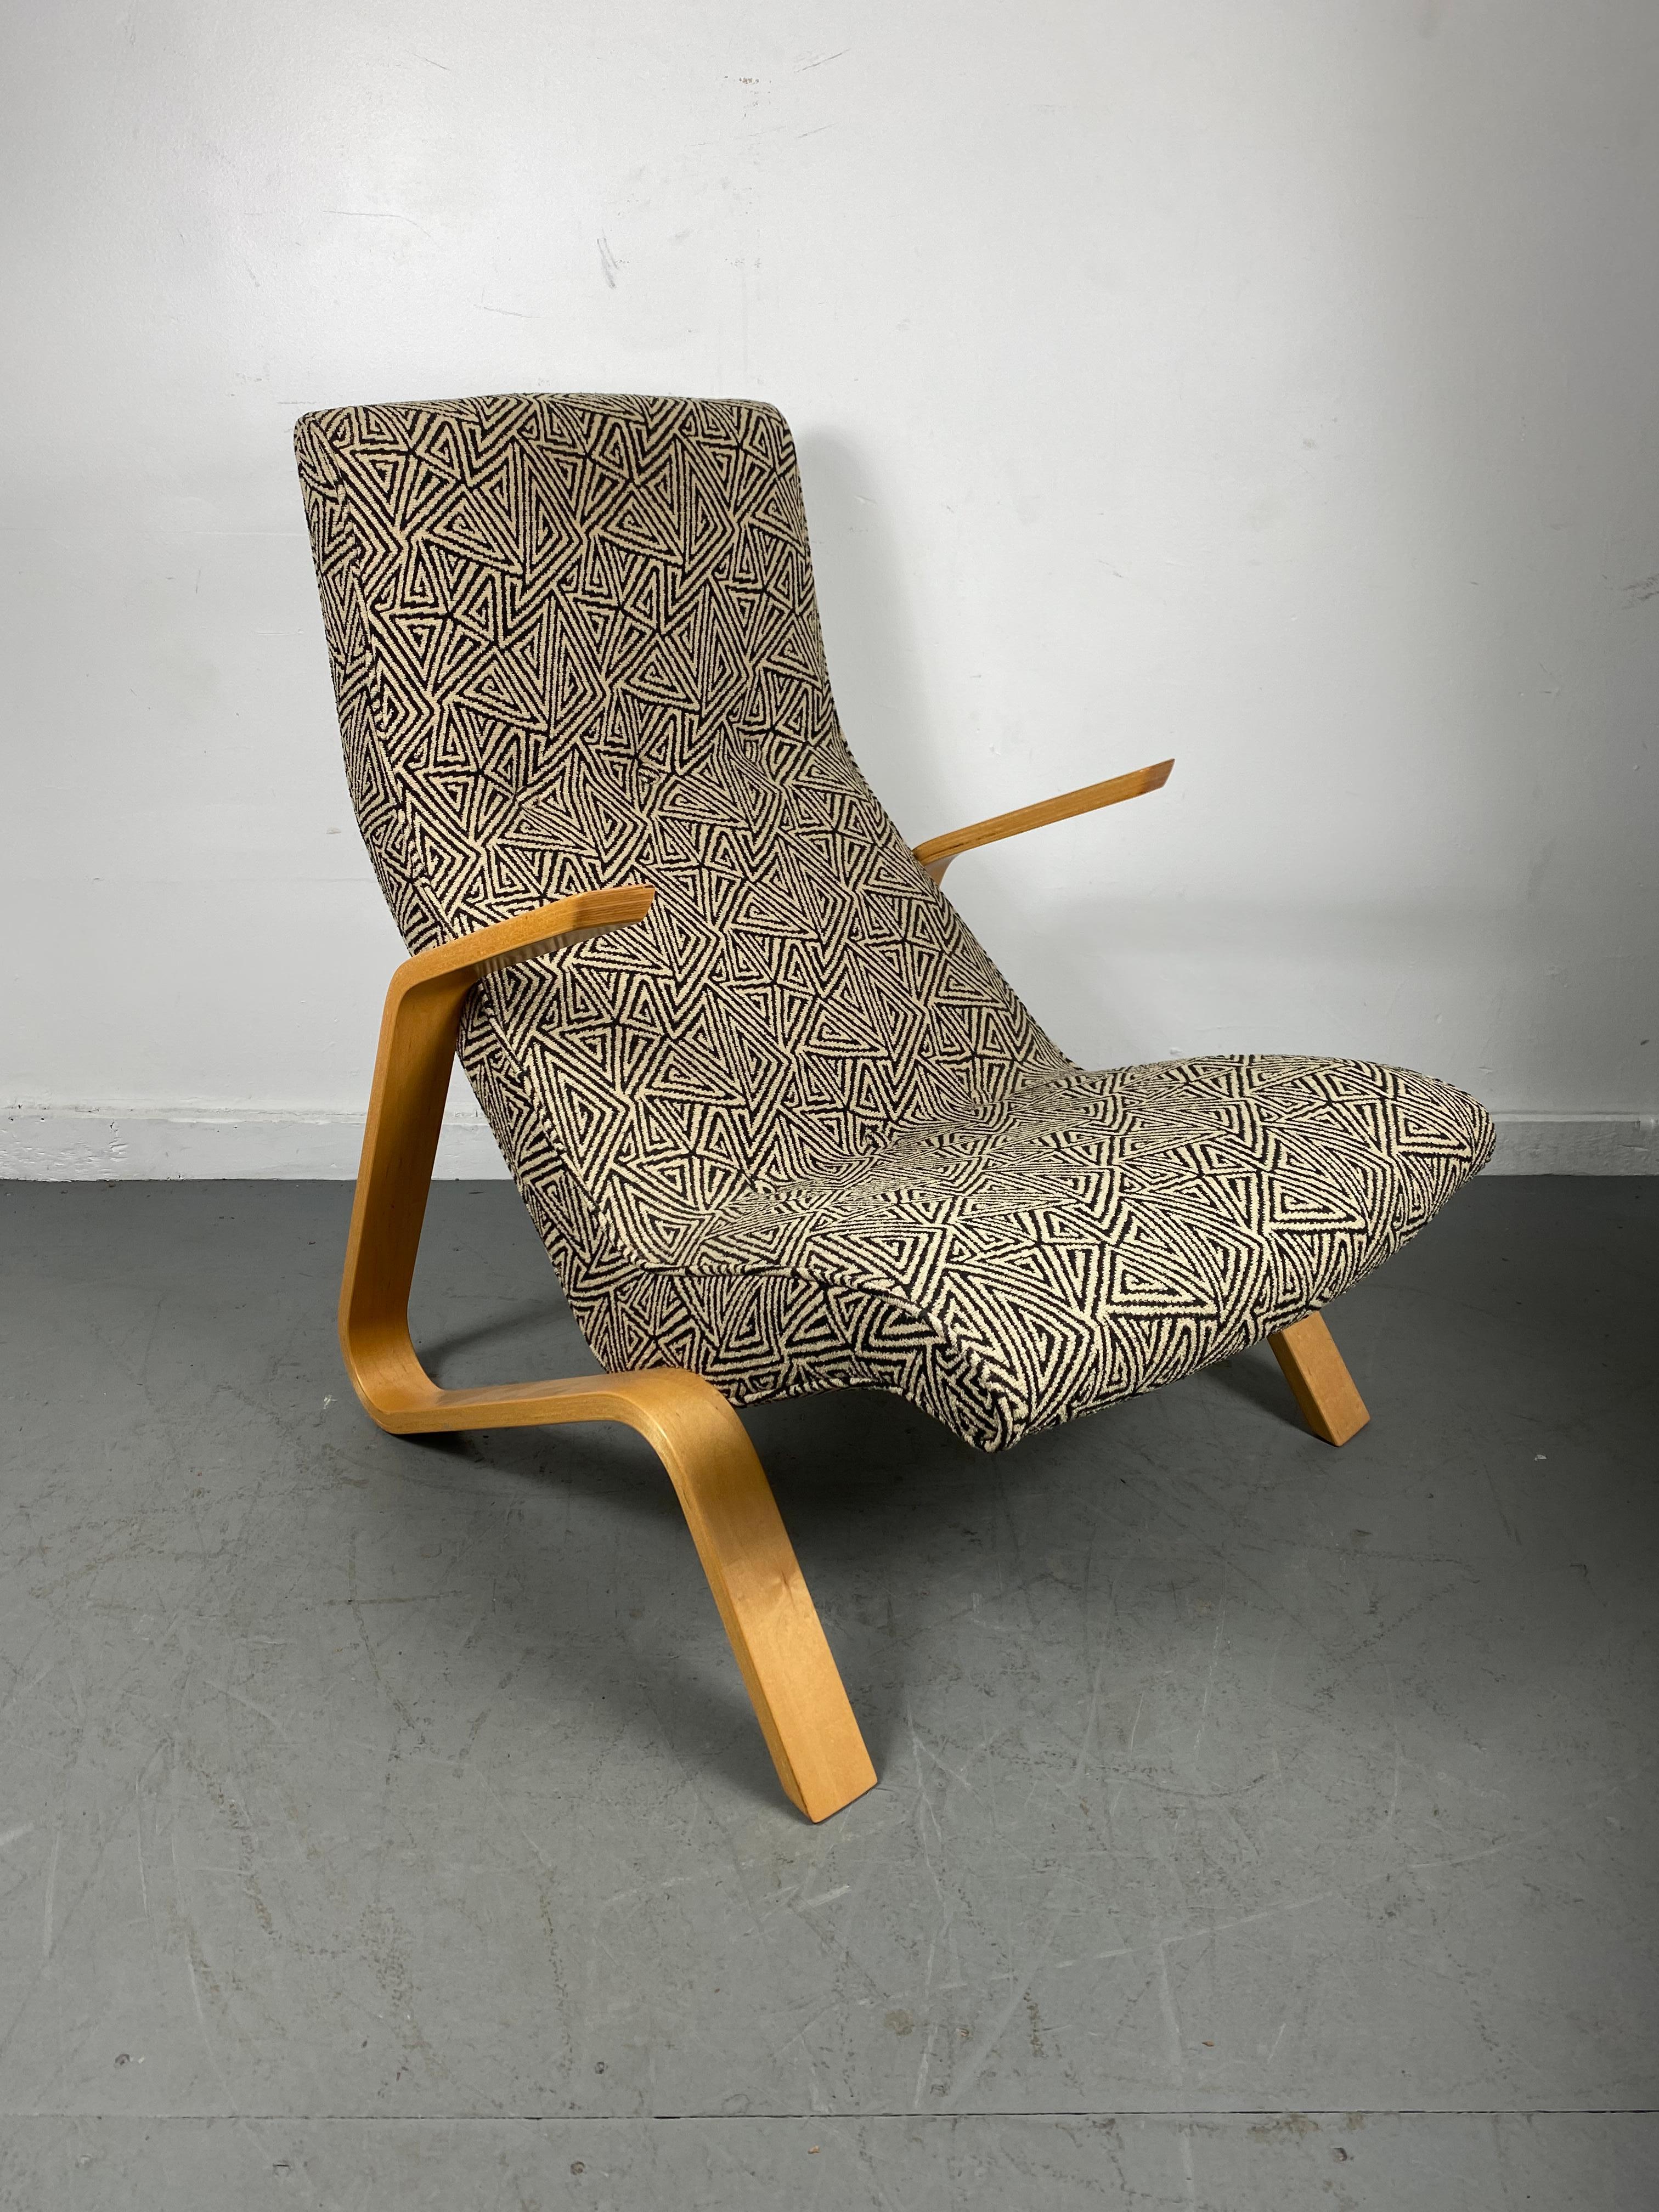 Classic Modernist Grasshopper Lounge chair designed by Eero Saarinen / Modernica 1